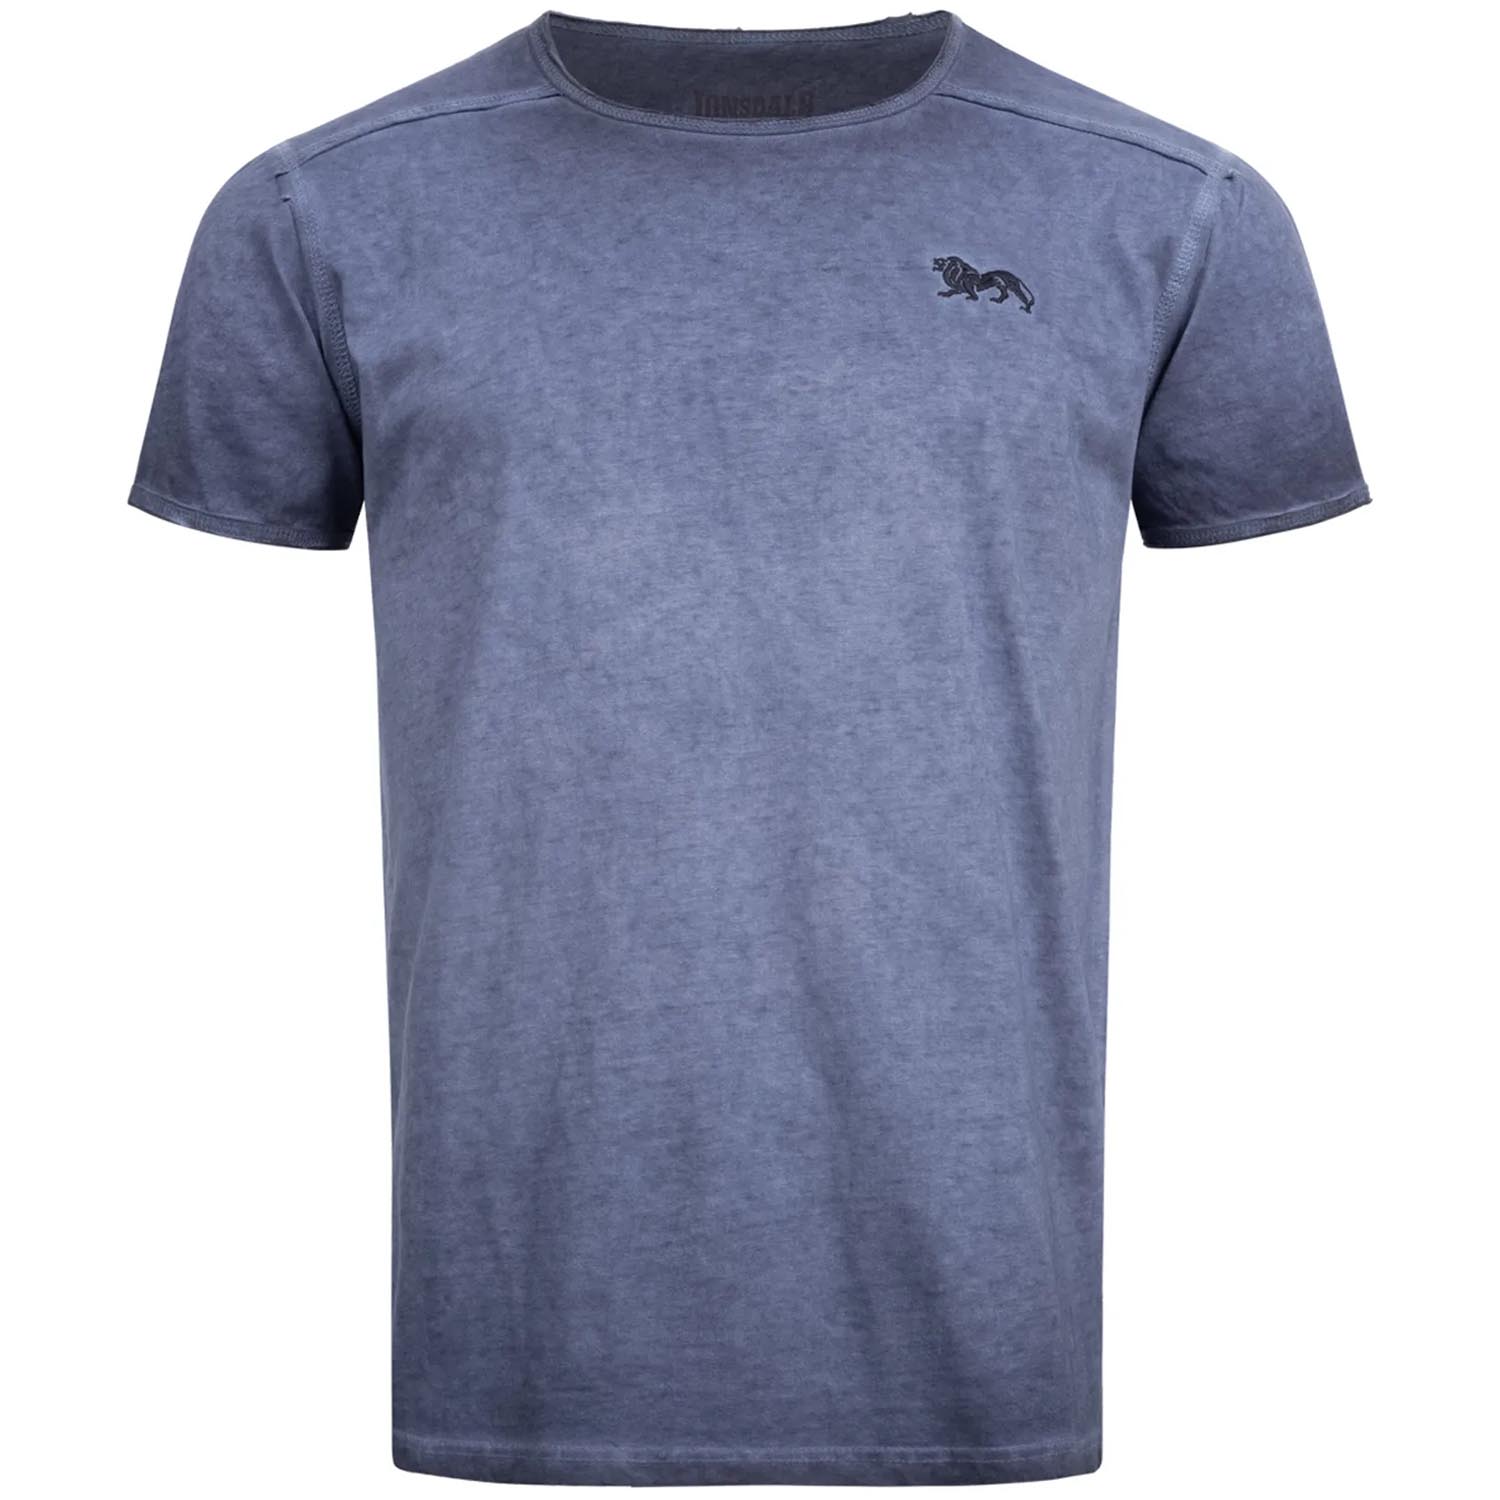 Lonsdale T-Shirt, Portskerra, blue, XXL